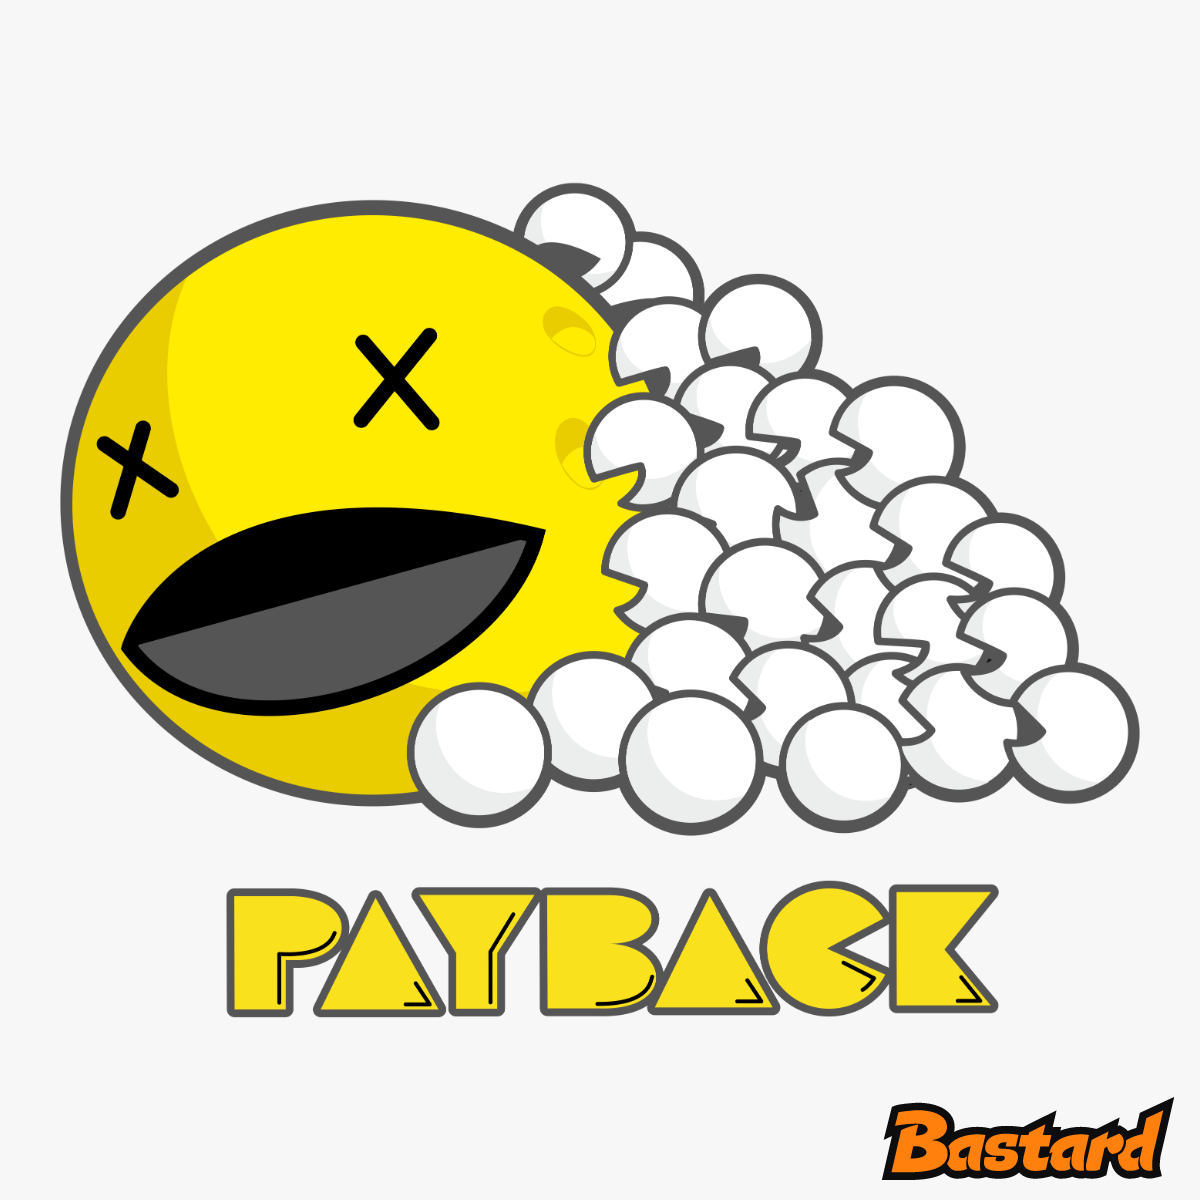 Payback